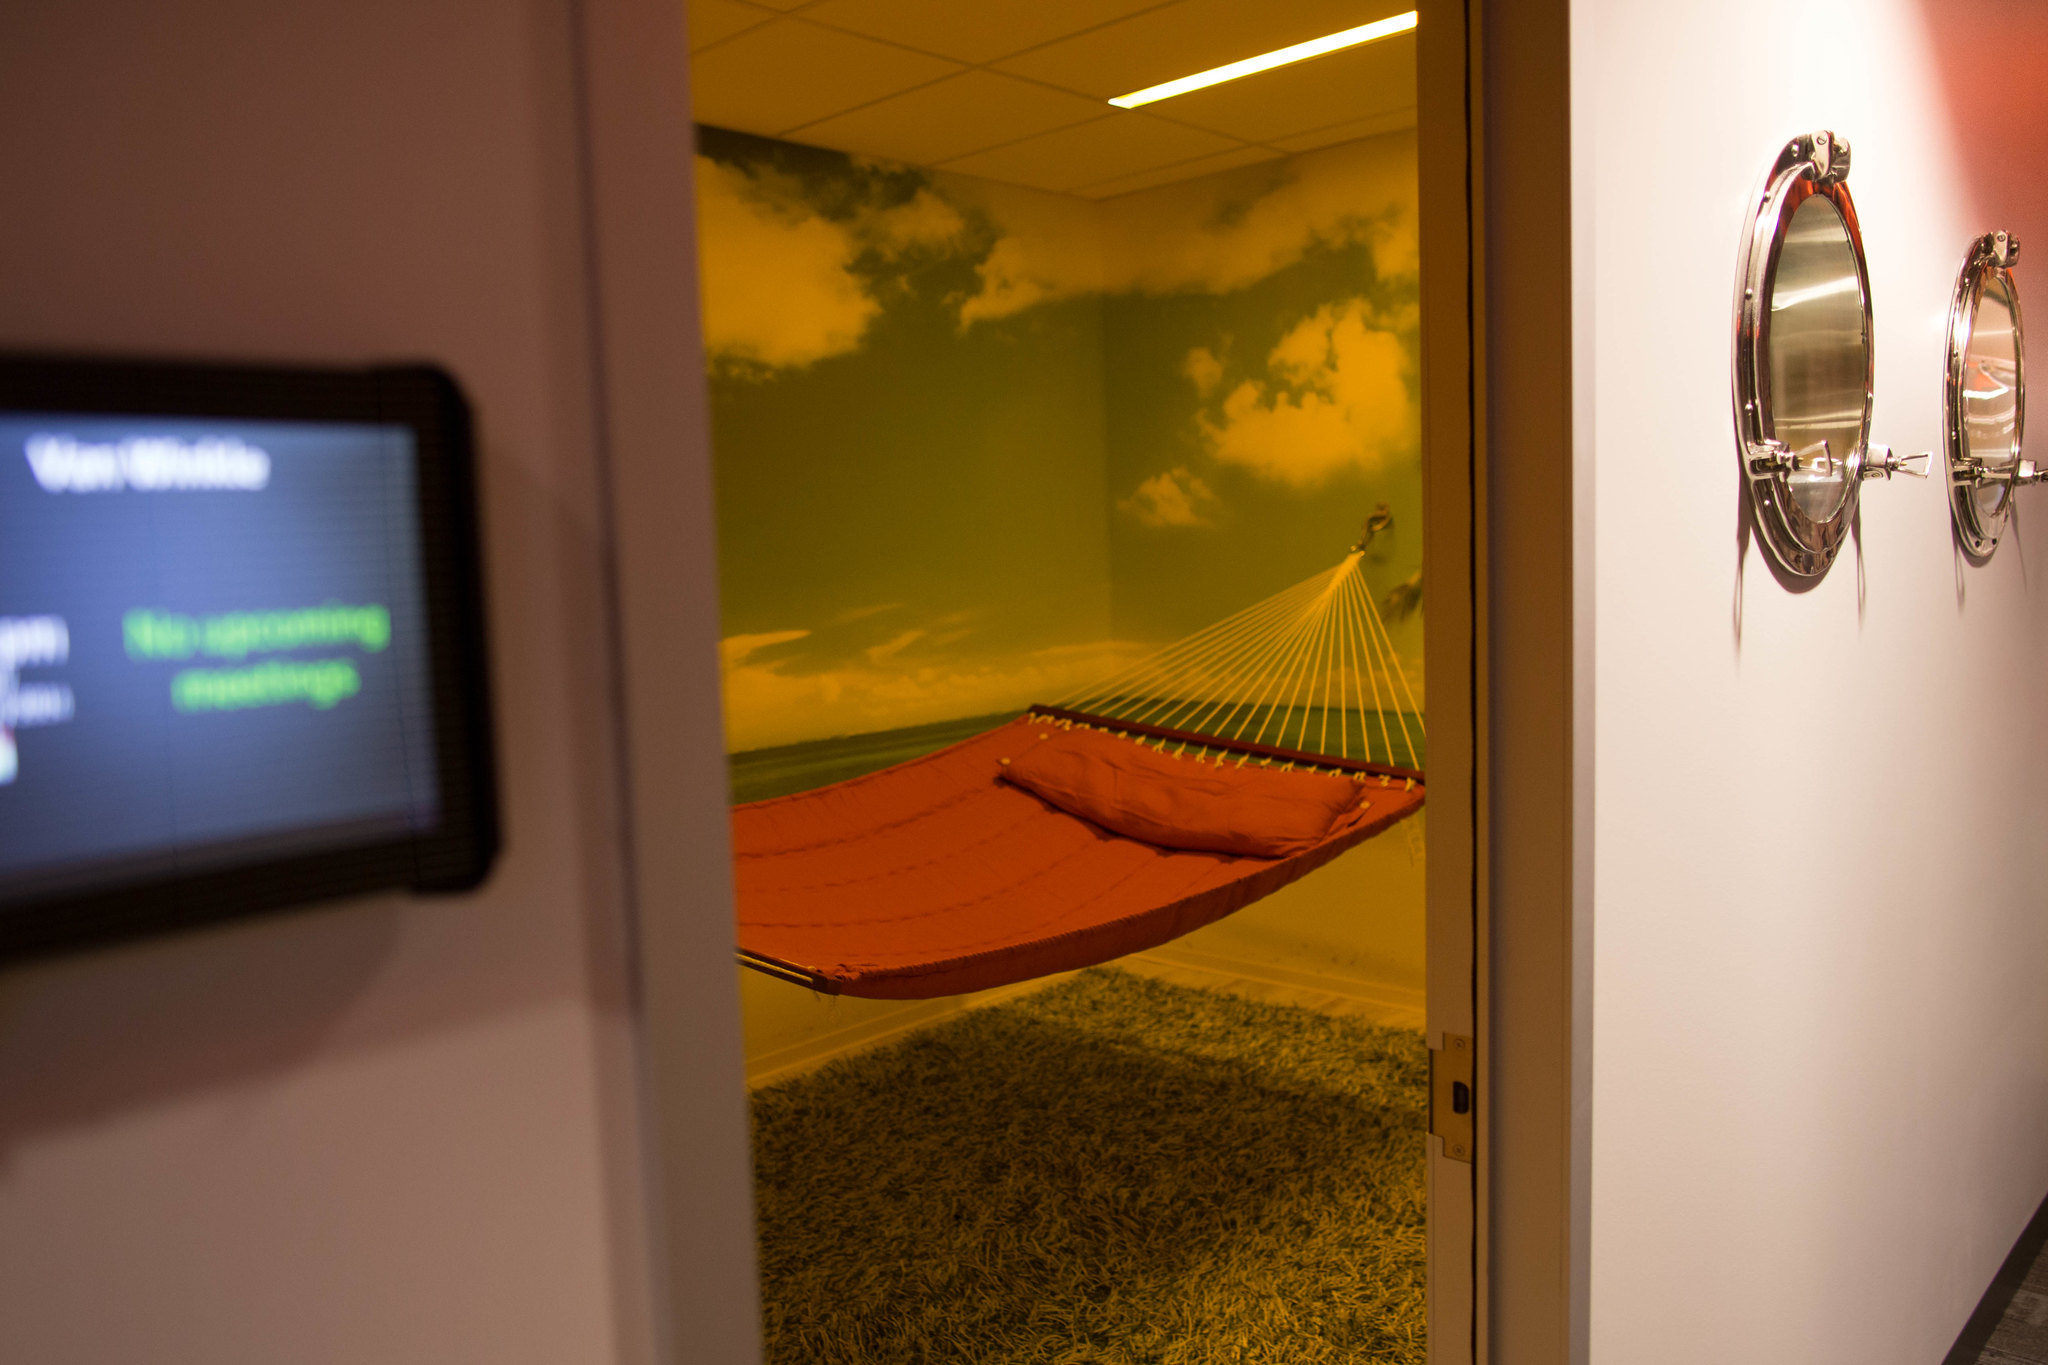 A nap room in a HubSpot office